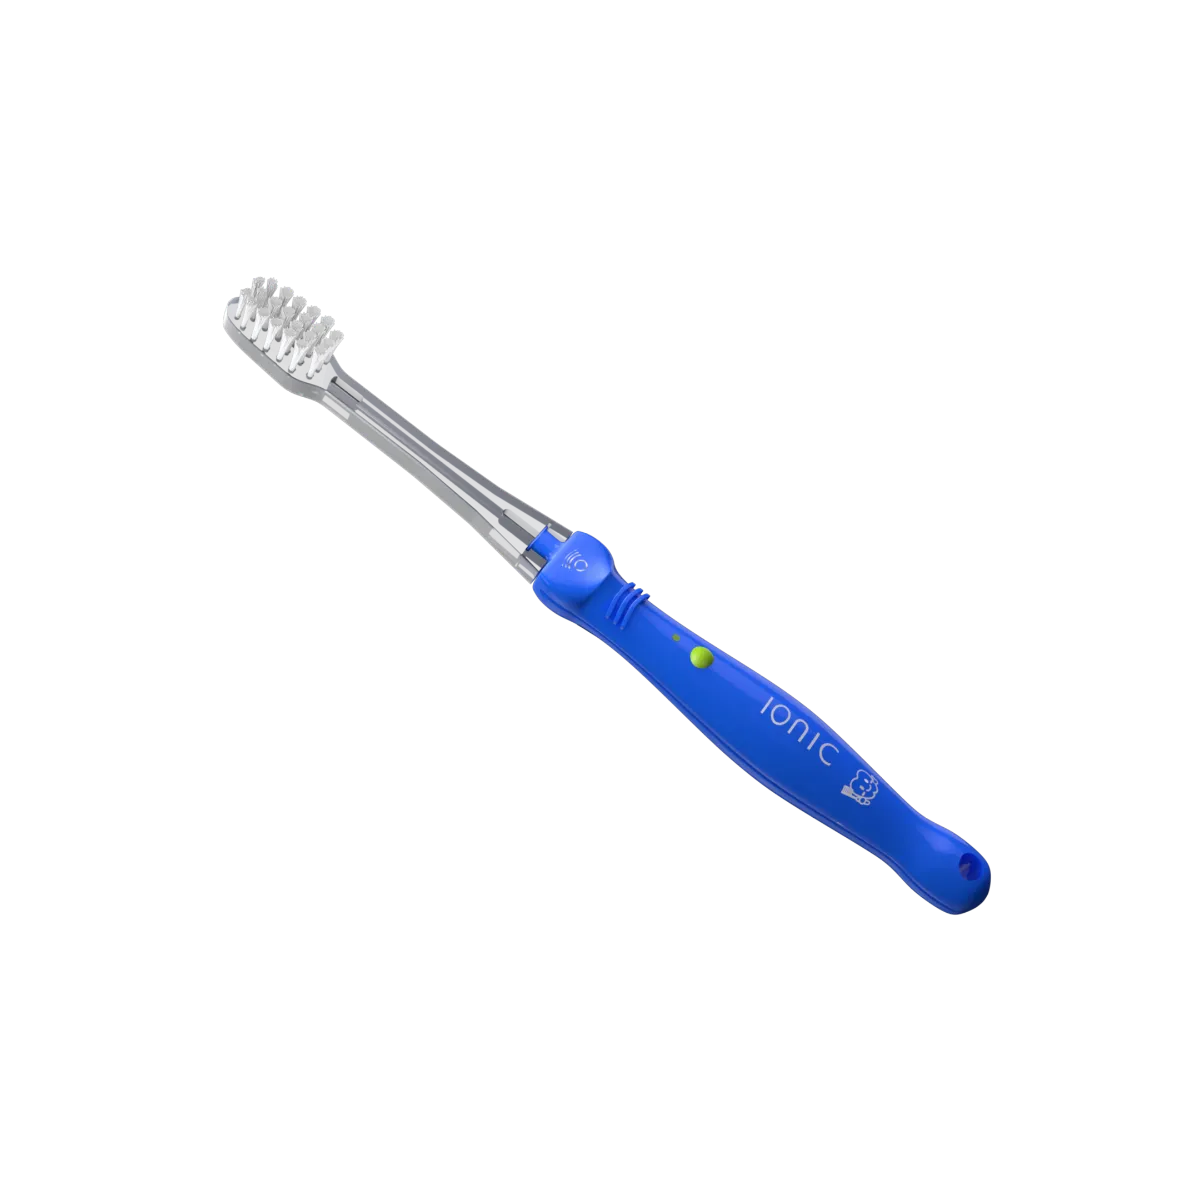 Ionizačná zubná kefka IONICKISS KIDS  detská, modrá 1×1 ks, ionizačná zubná kefka